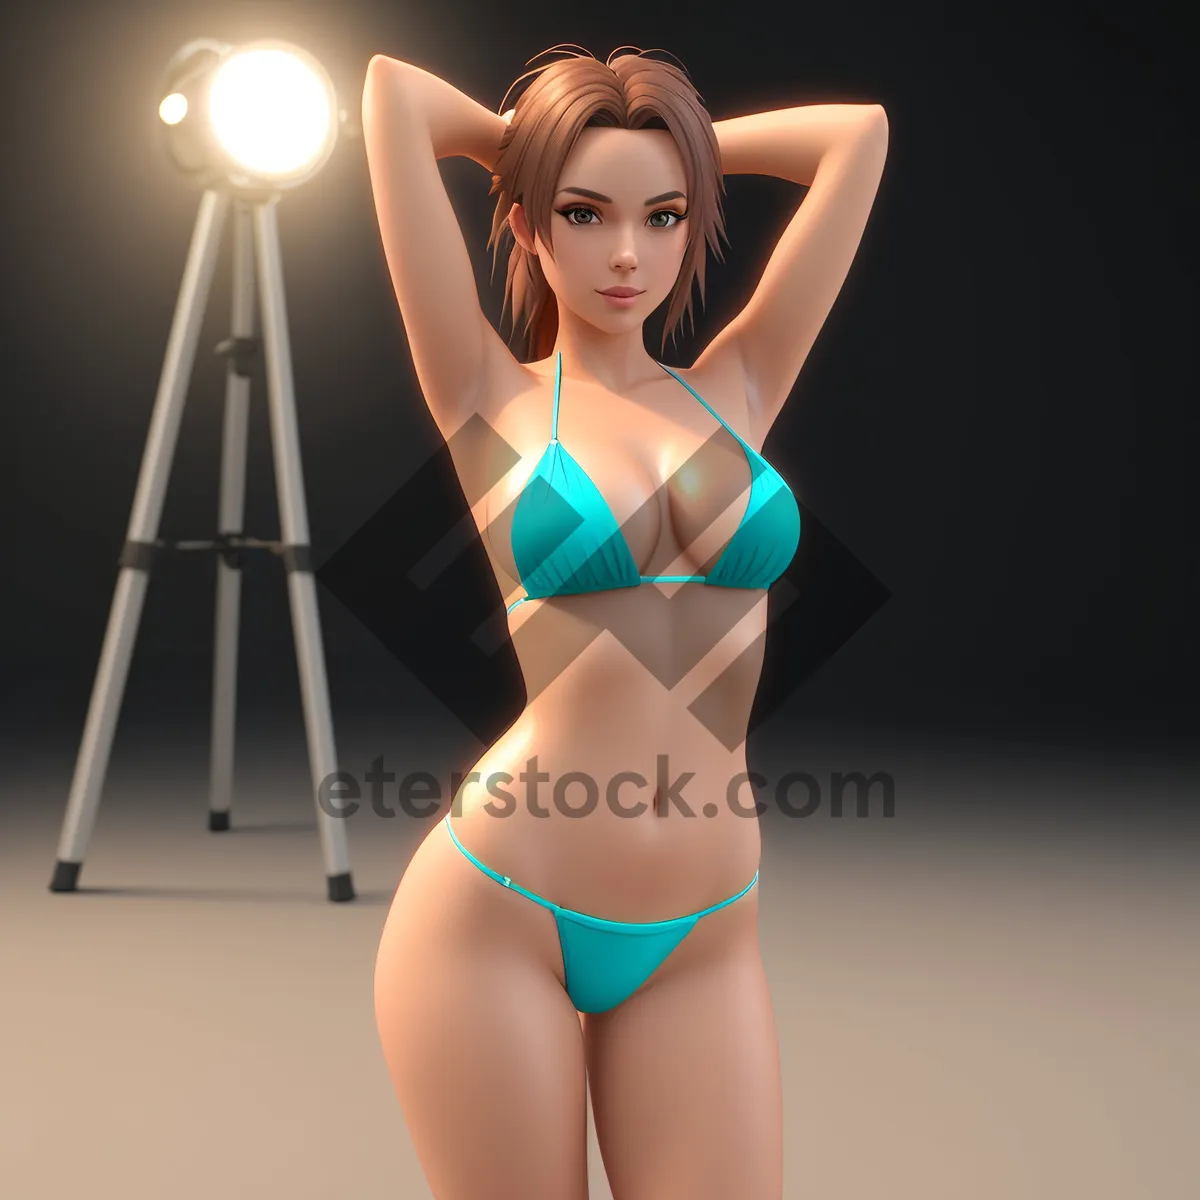 Picture of Seductive Smiling Beachwear Model in Hot Bikini